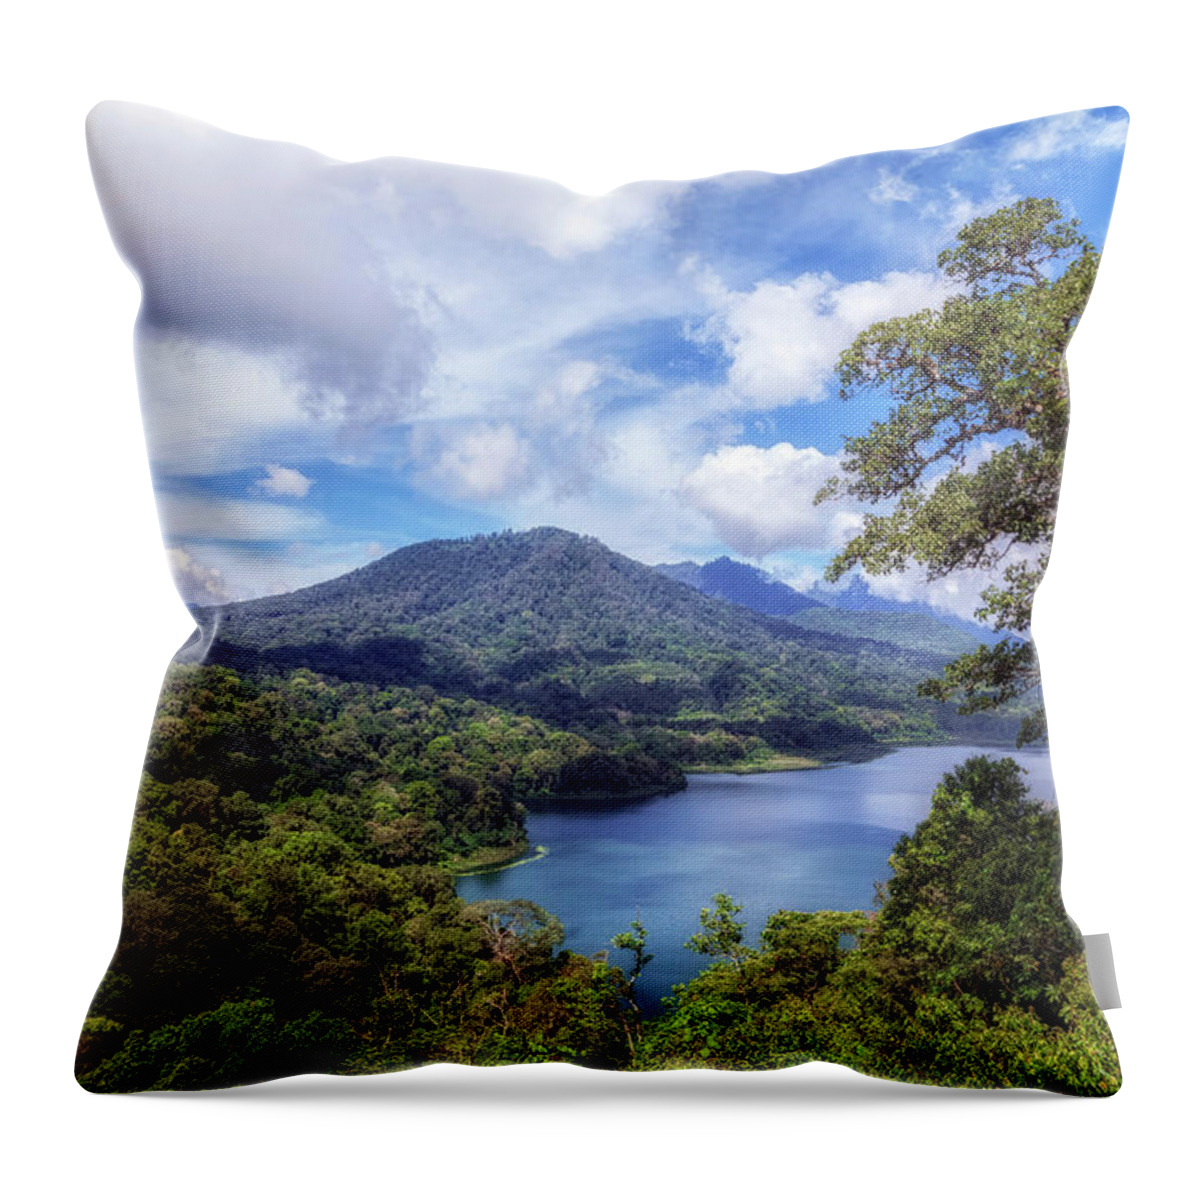 Lake Tamblingan Throw Pillow featuring the photograph Tamblingan Lake - Bali #1 by Joana Kruse